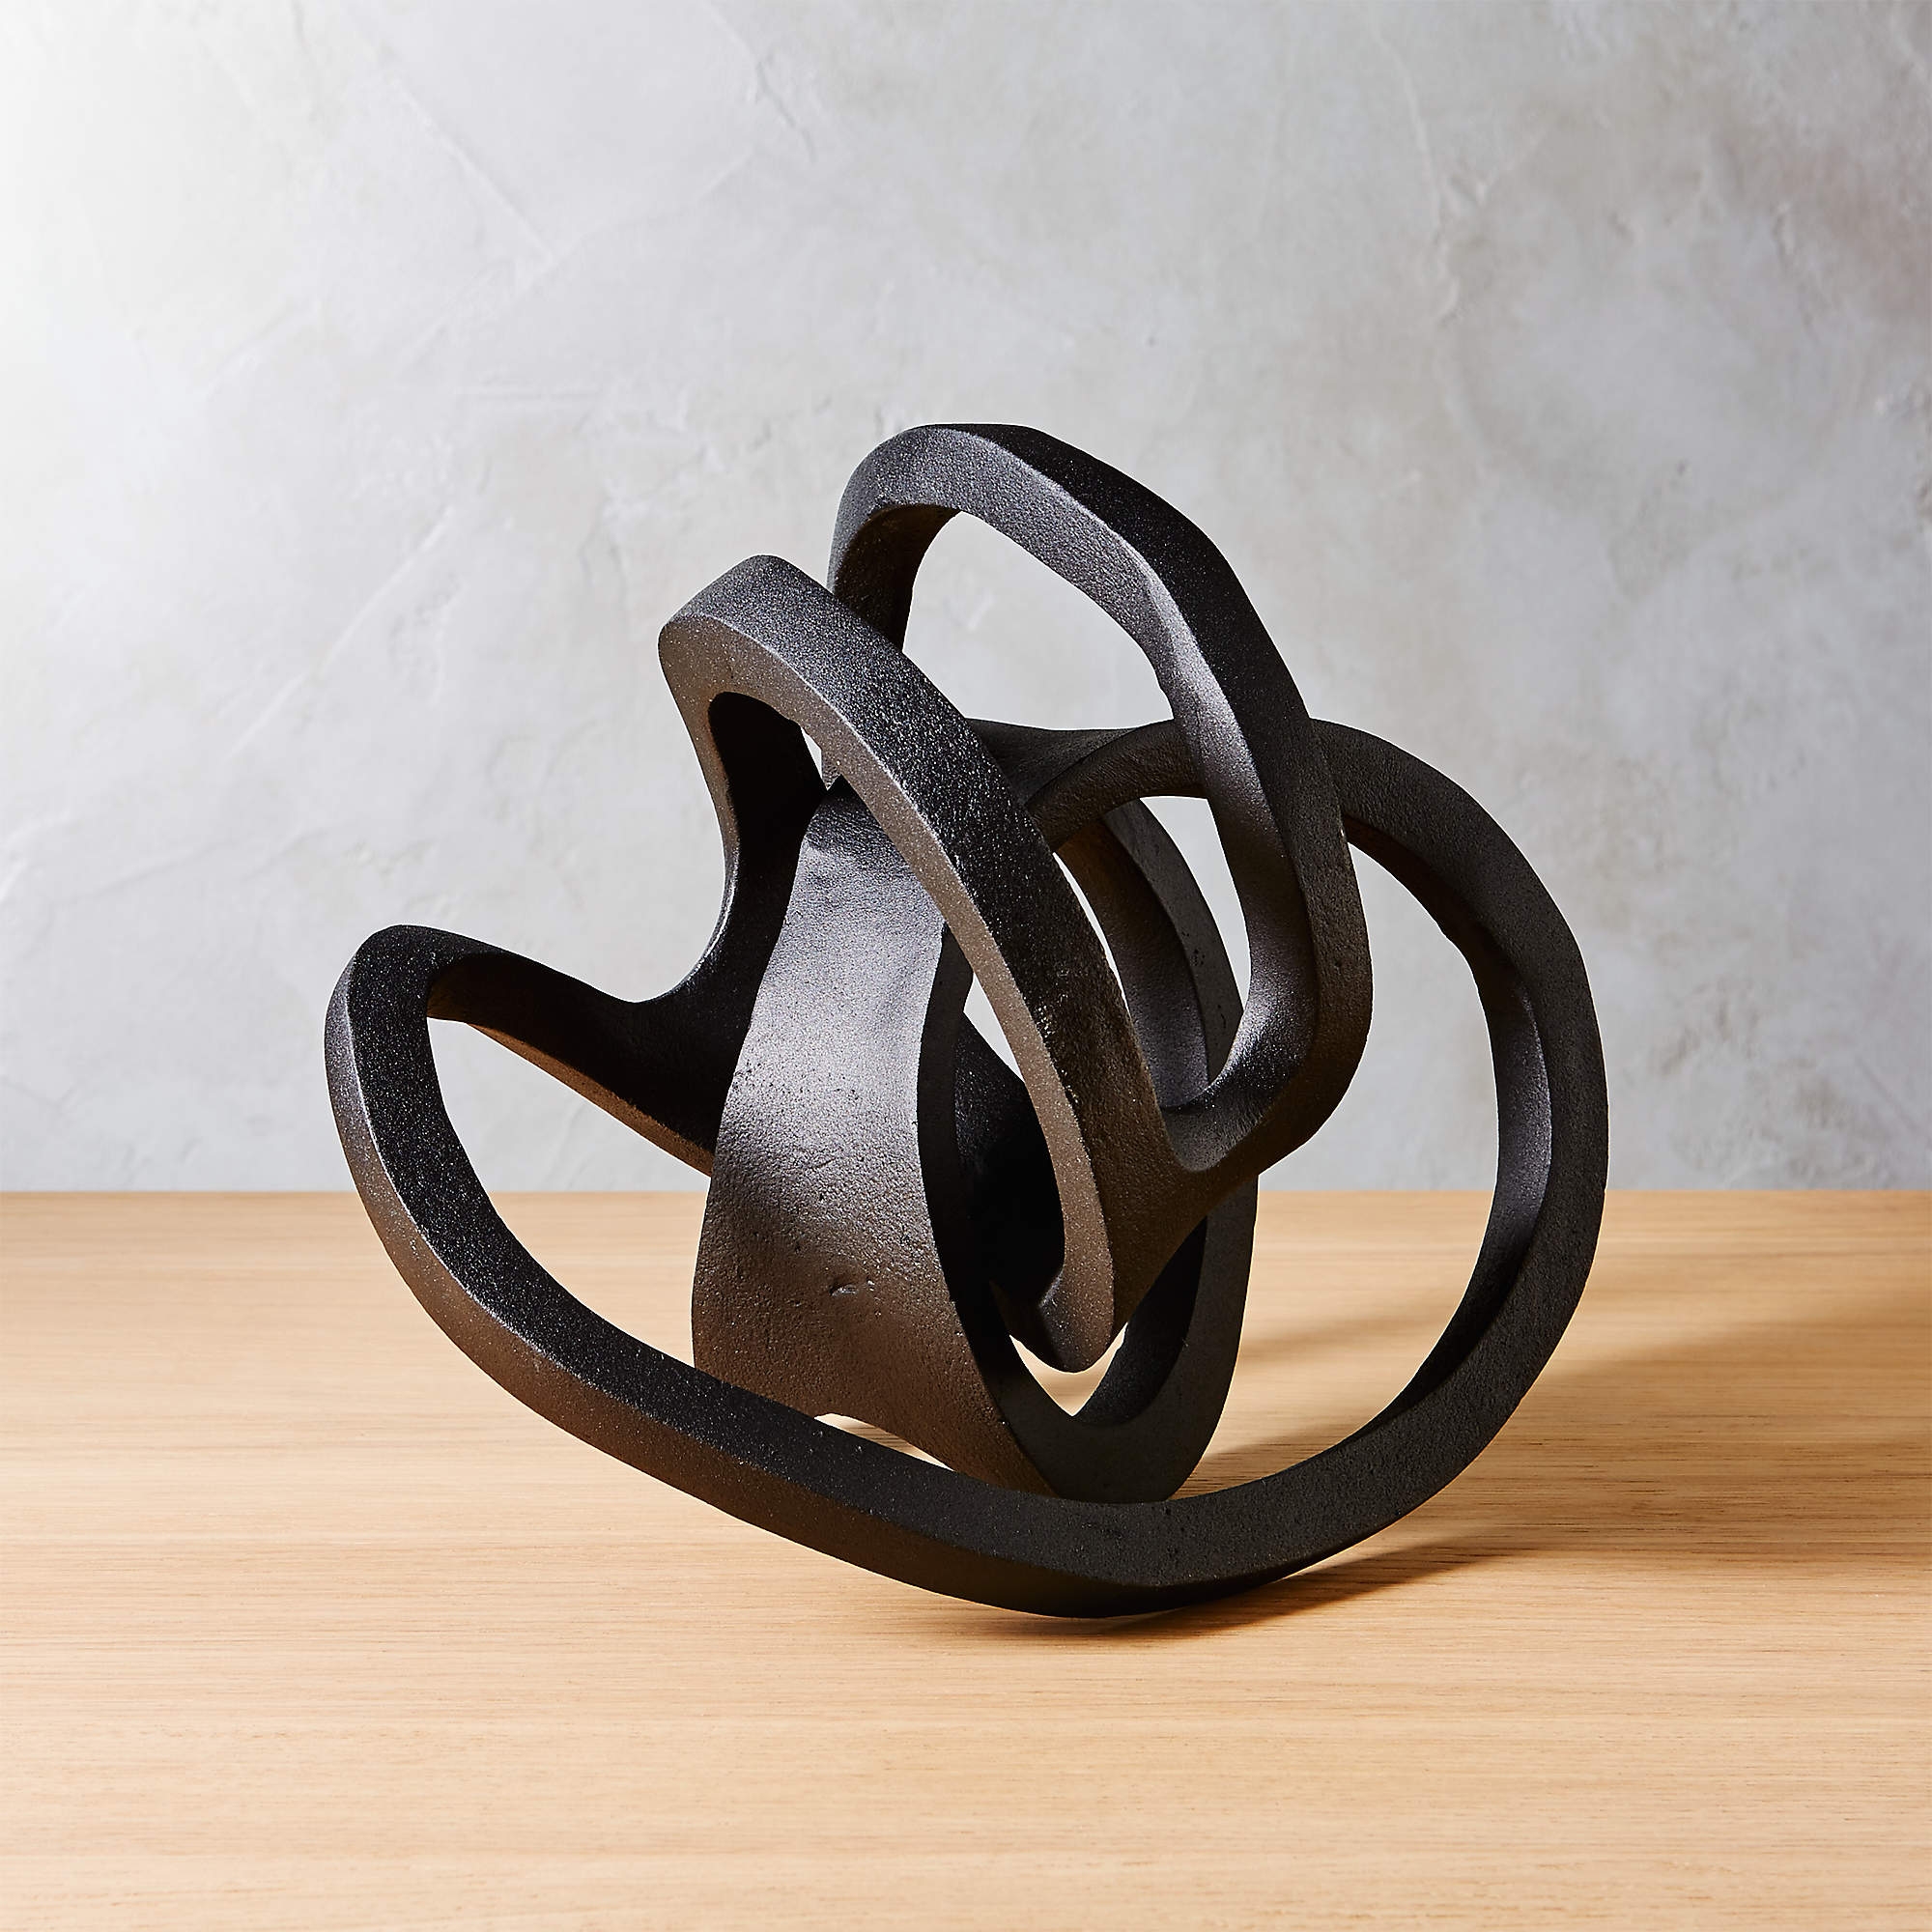 Infinity Black Knot Sculpture - Image 2